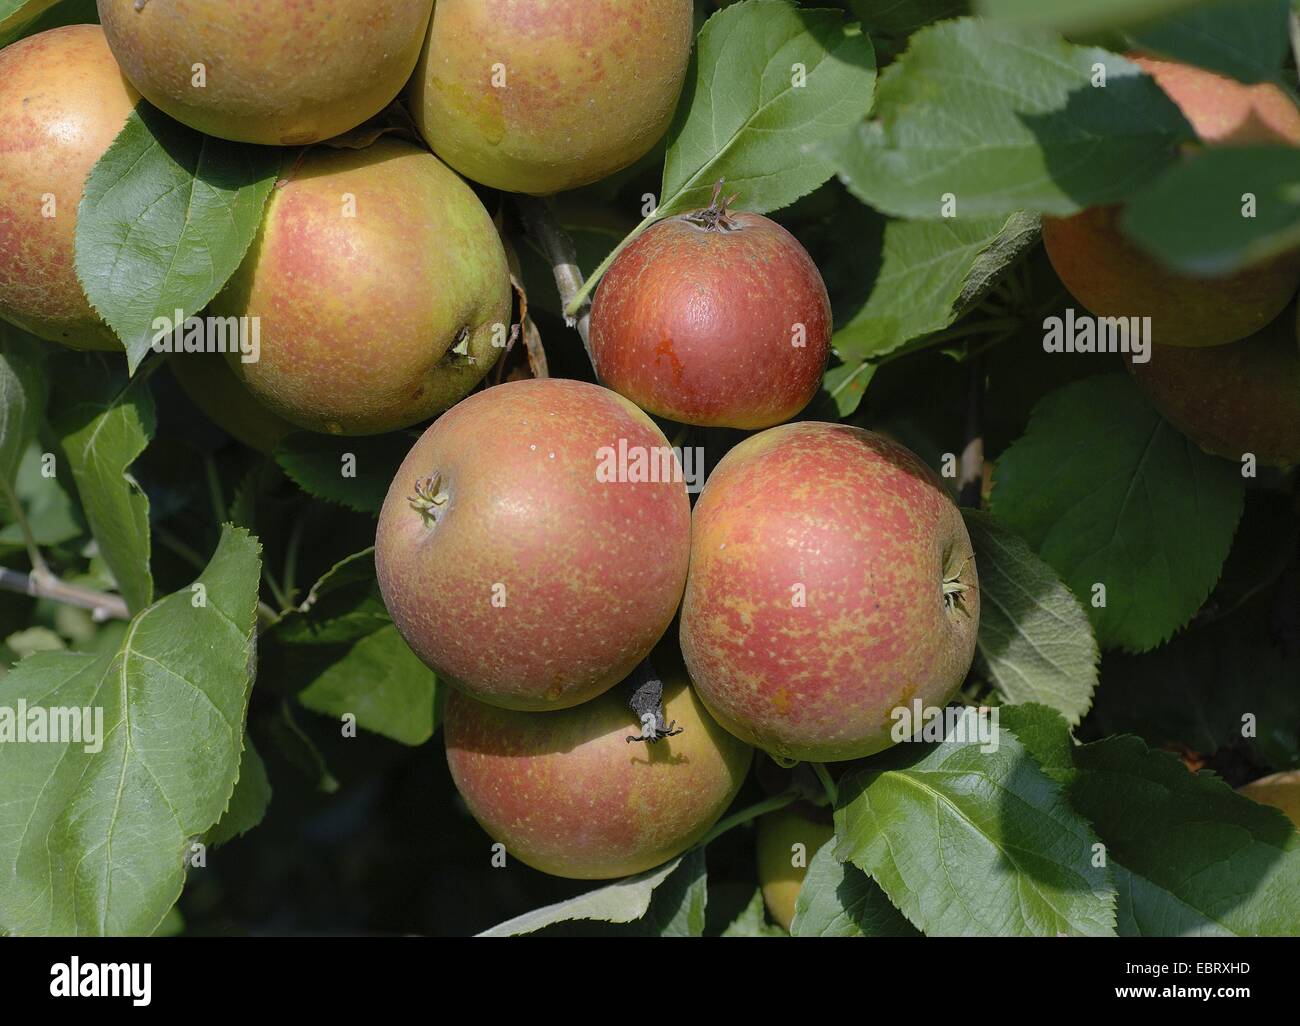 apple tree (Malus domestica 'Roter Boskoop', Malus domestica Roter Boskoop), cultivar Roter Boskoop, apples on a tree Stock Photo